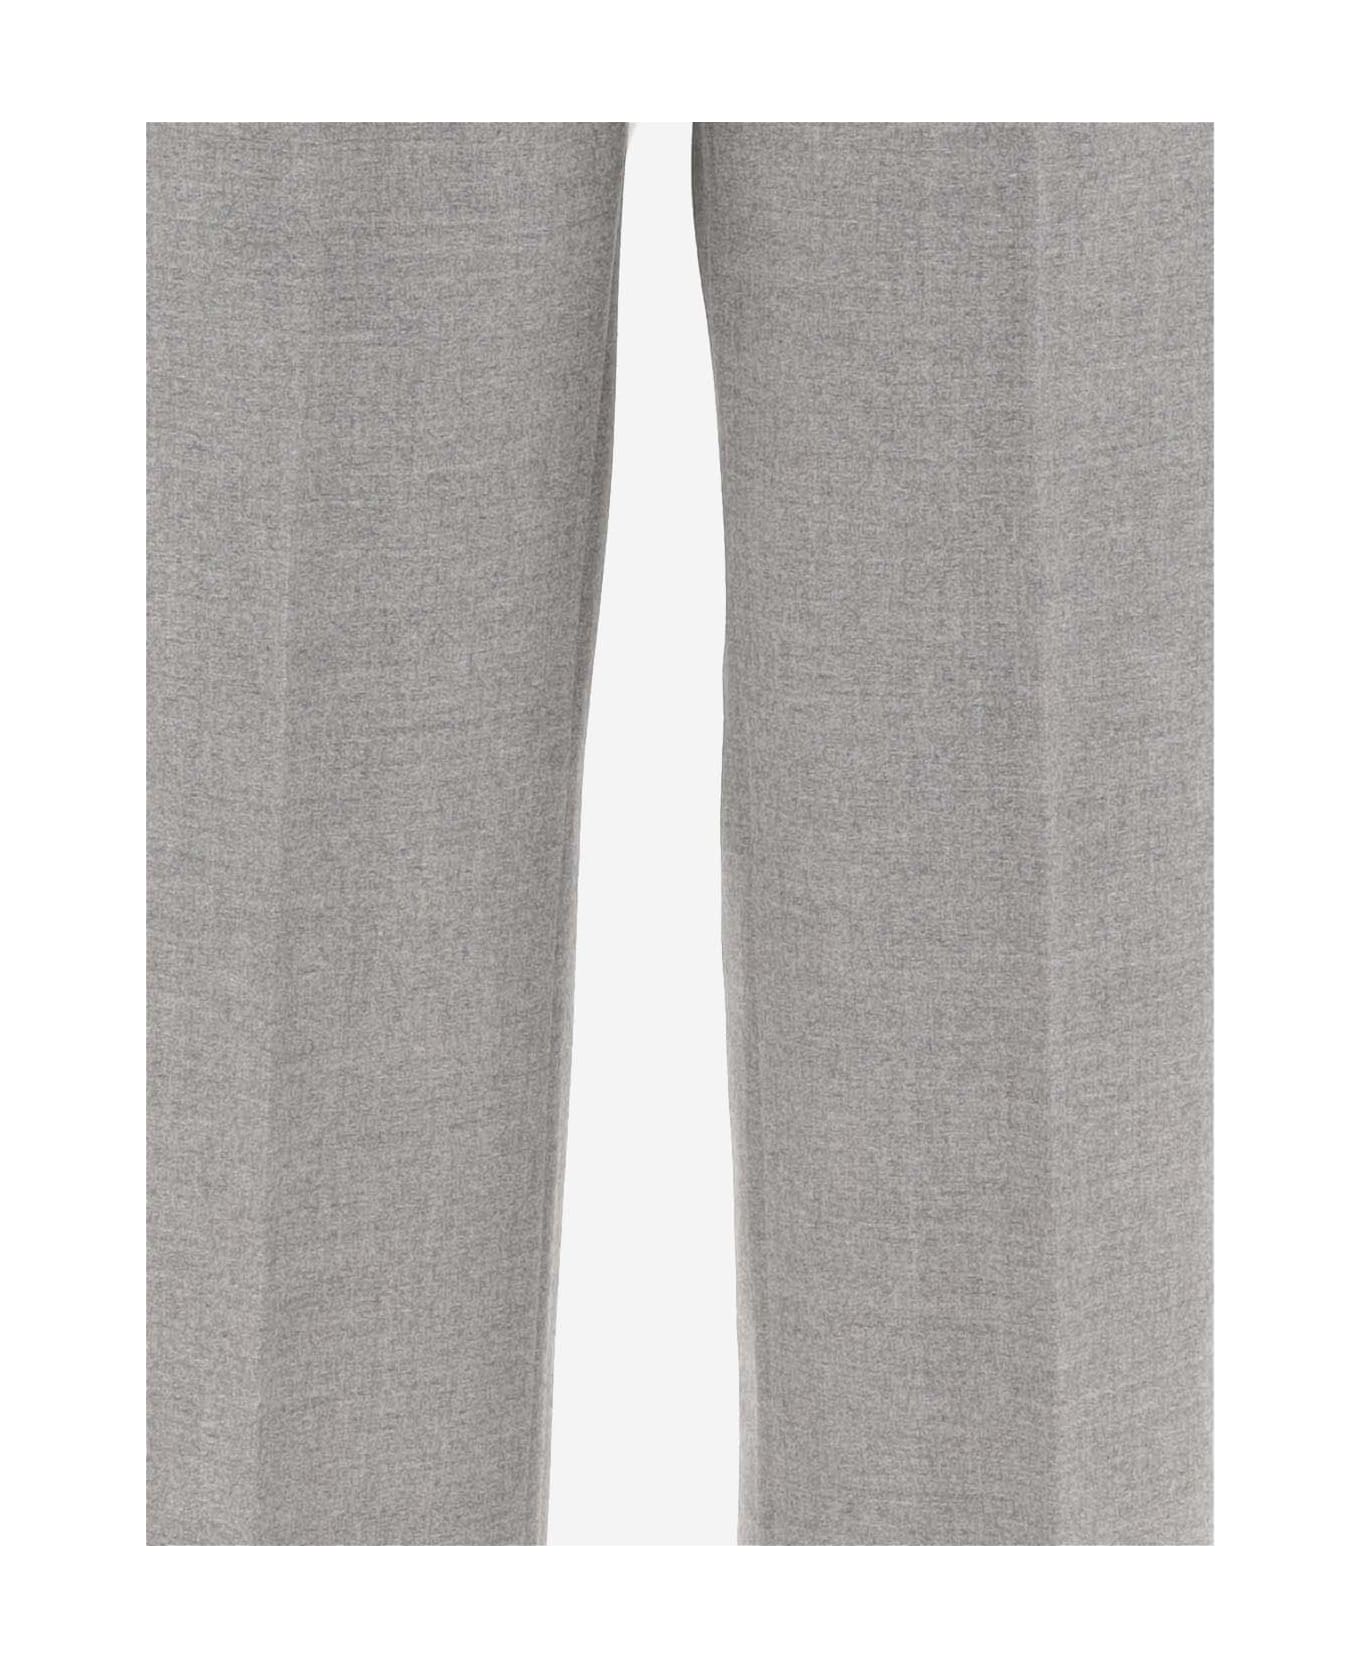 QL2 Stretch Wool Pants - Grey